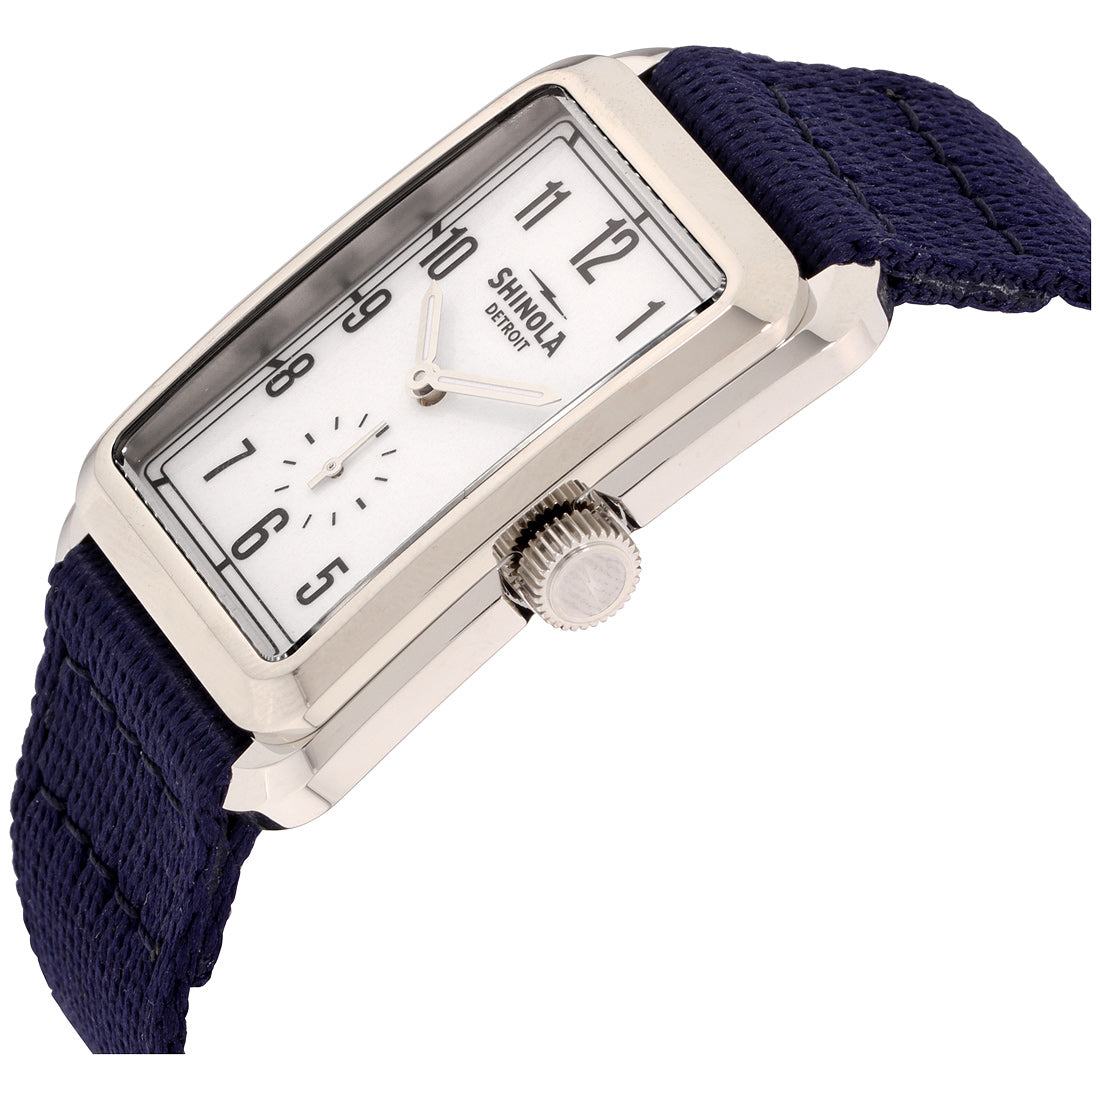 The Omaha Quartz Movement White Dial Ladies Watches S0120161951 | W11551